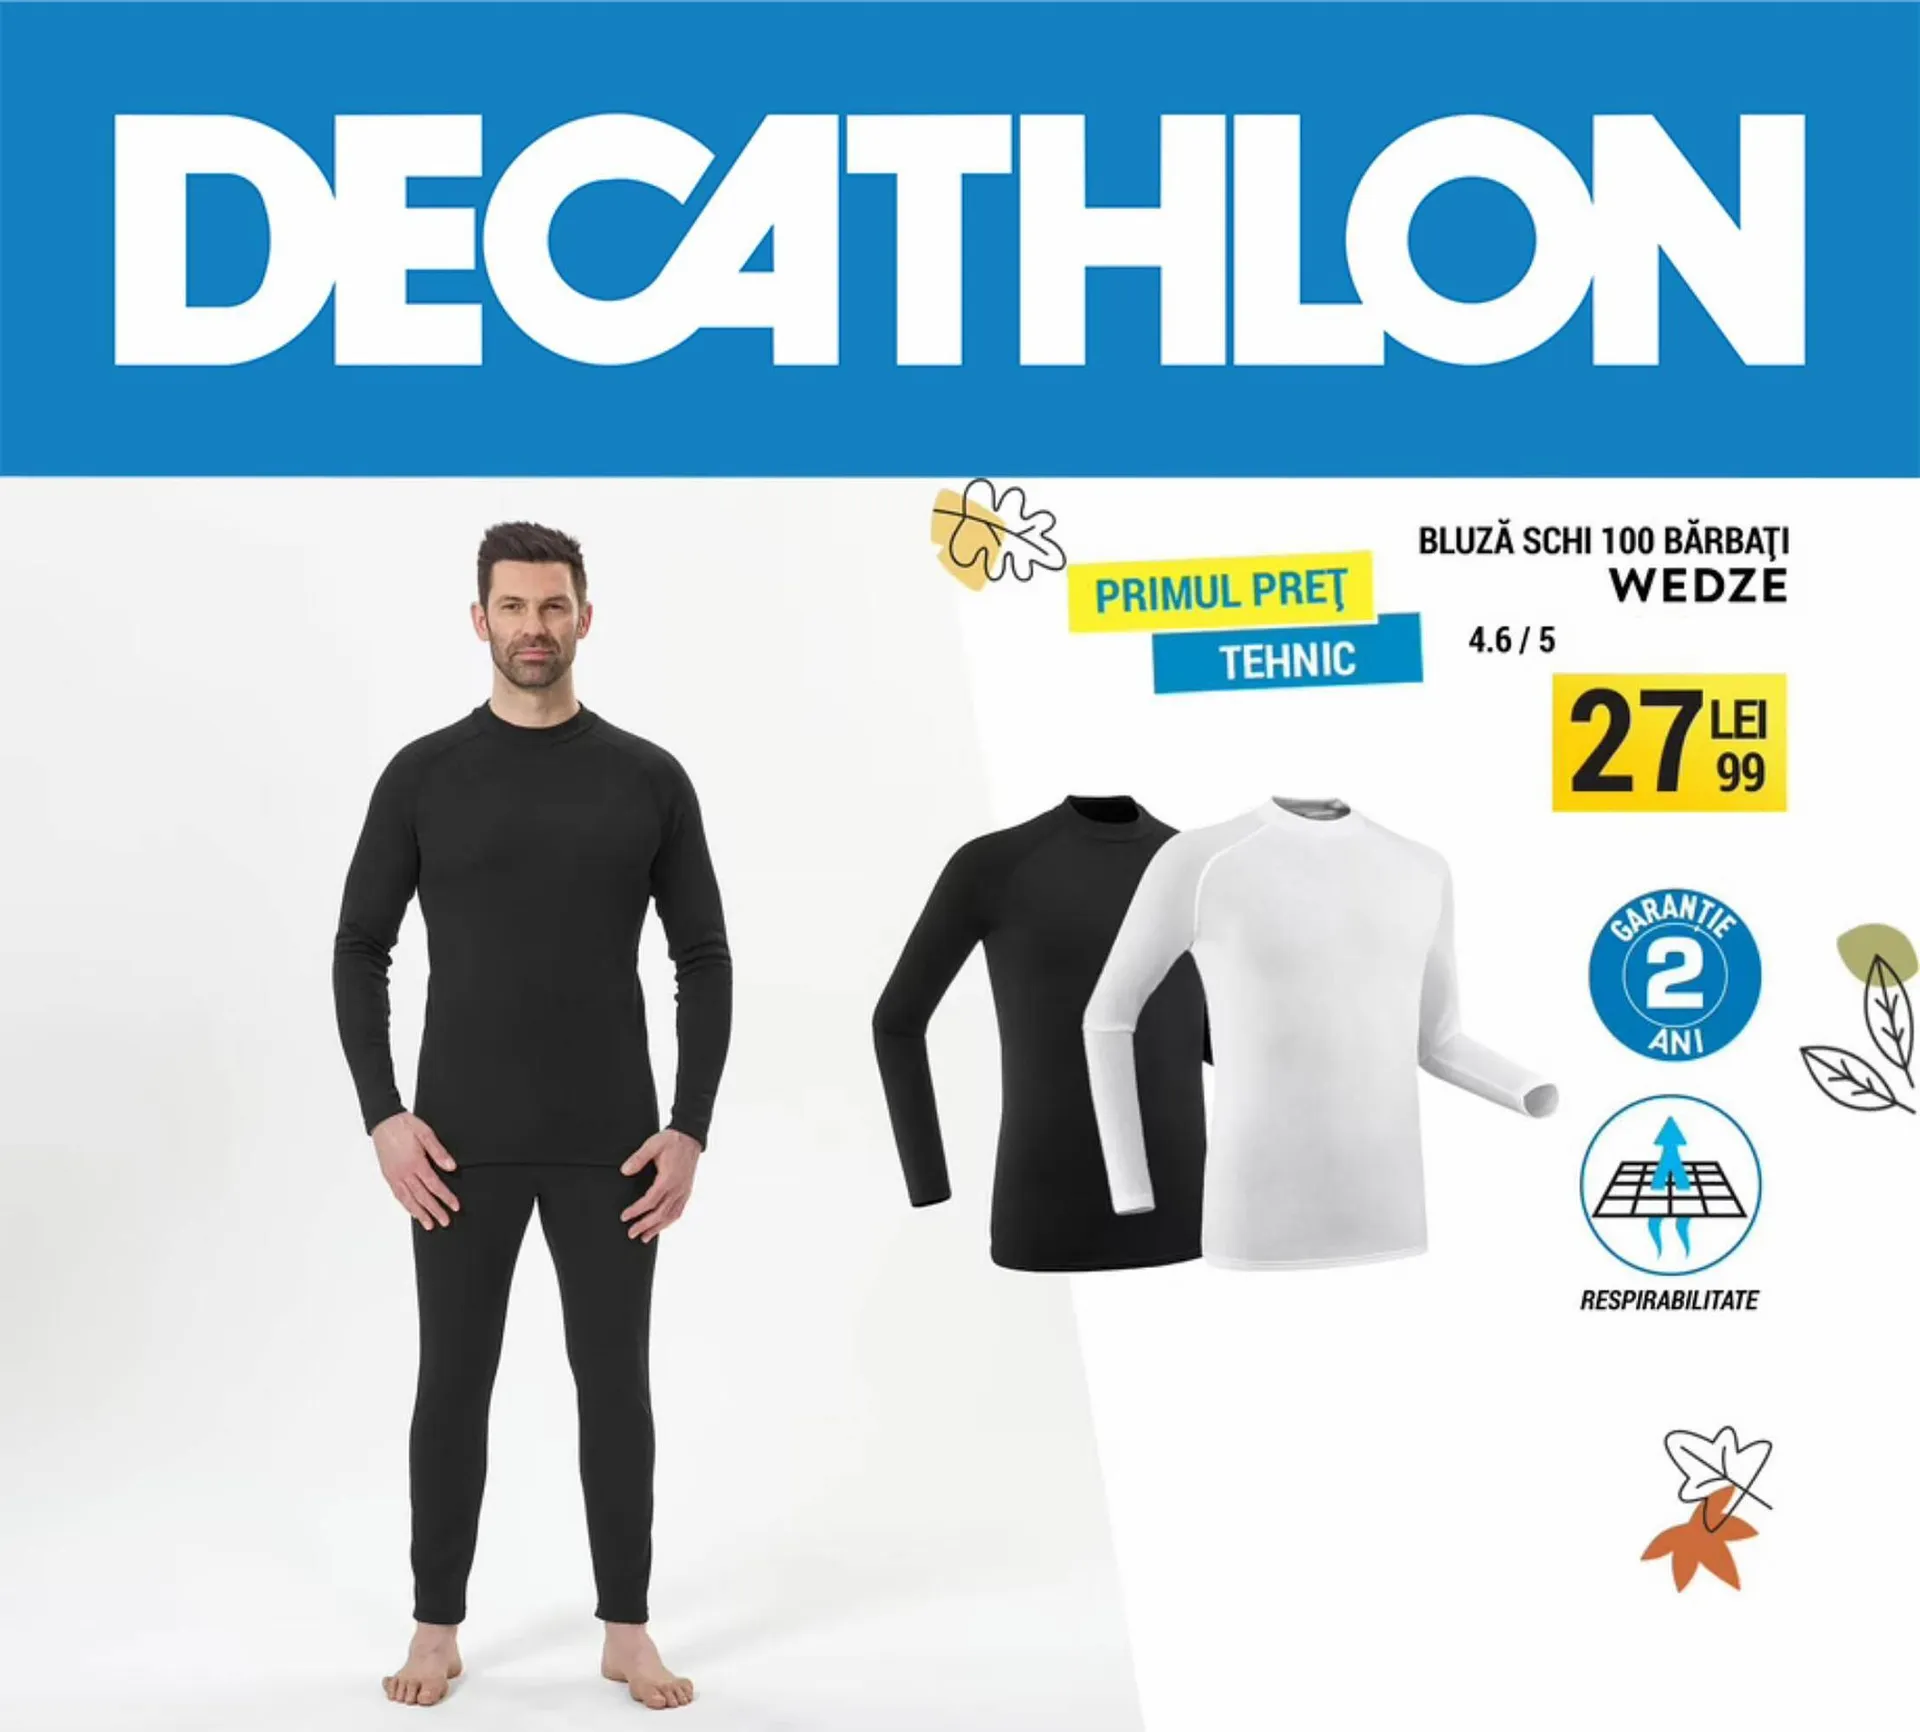 Decathlon catalog - 5